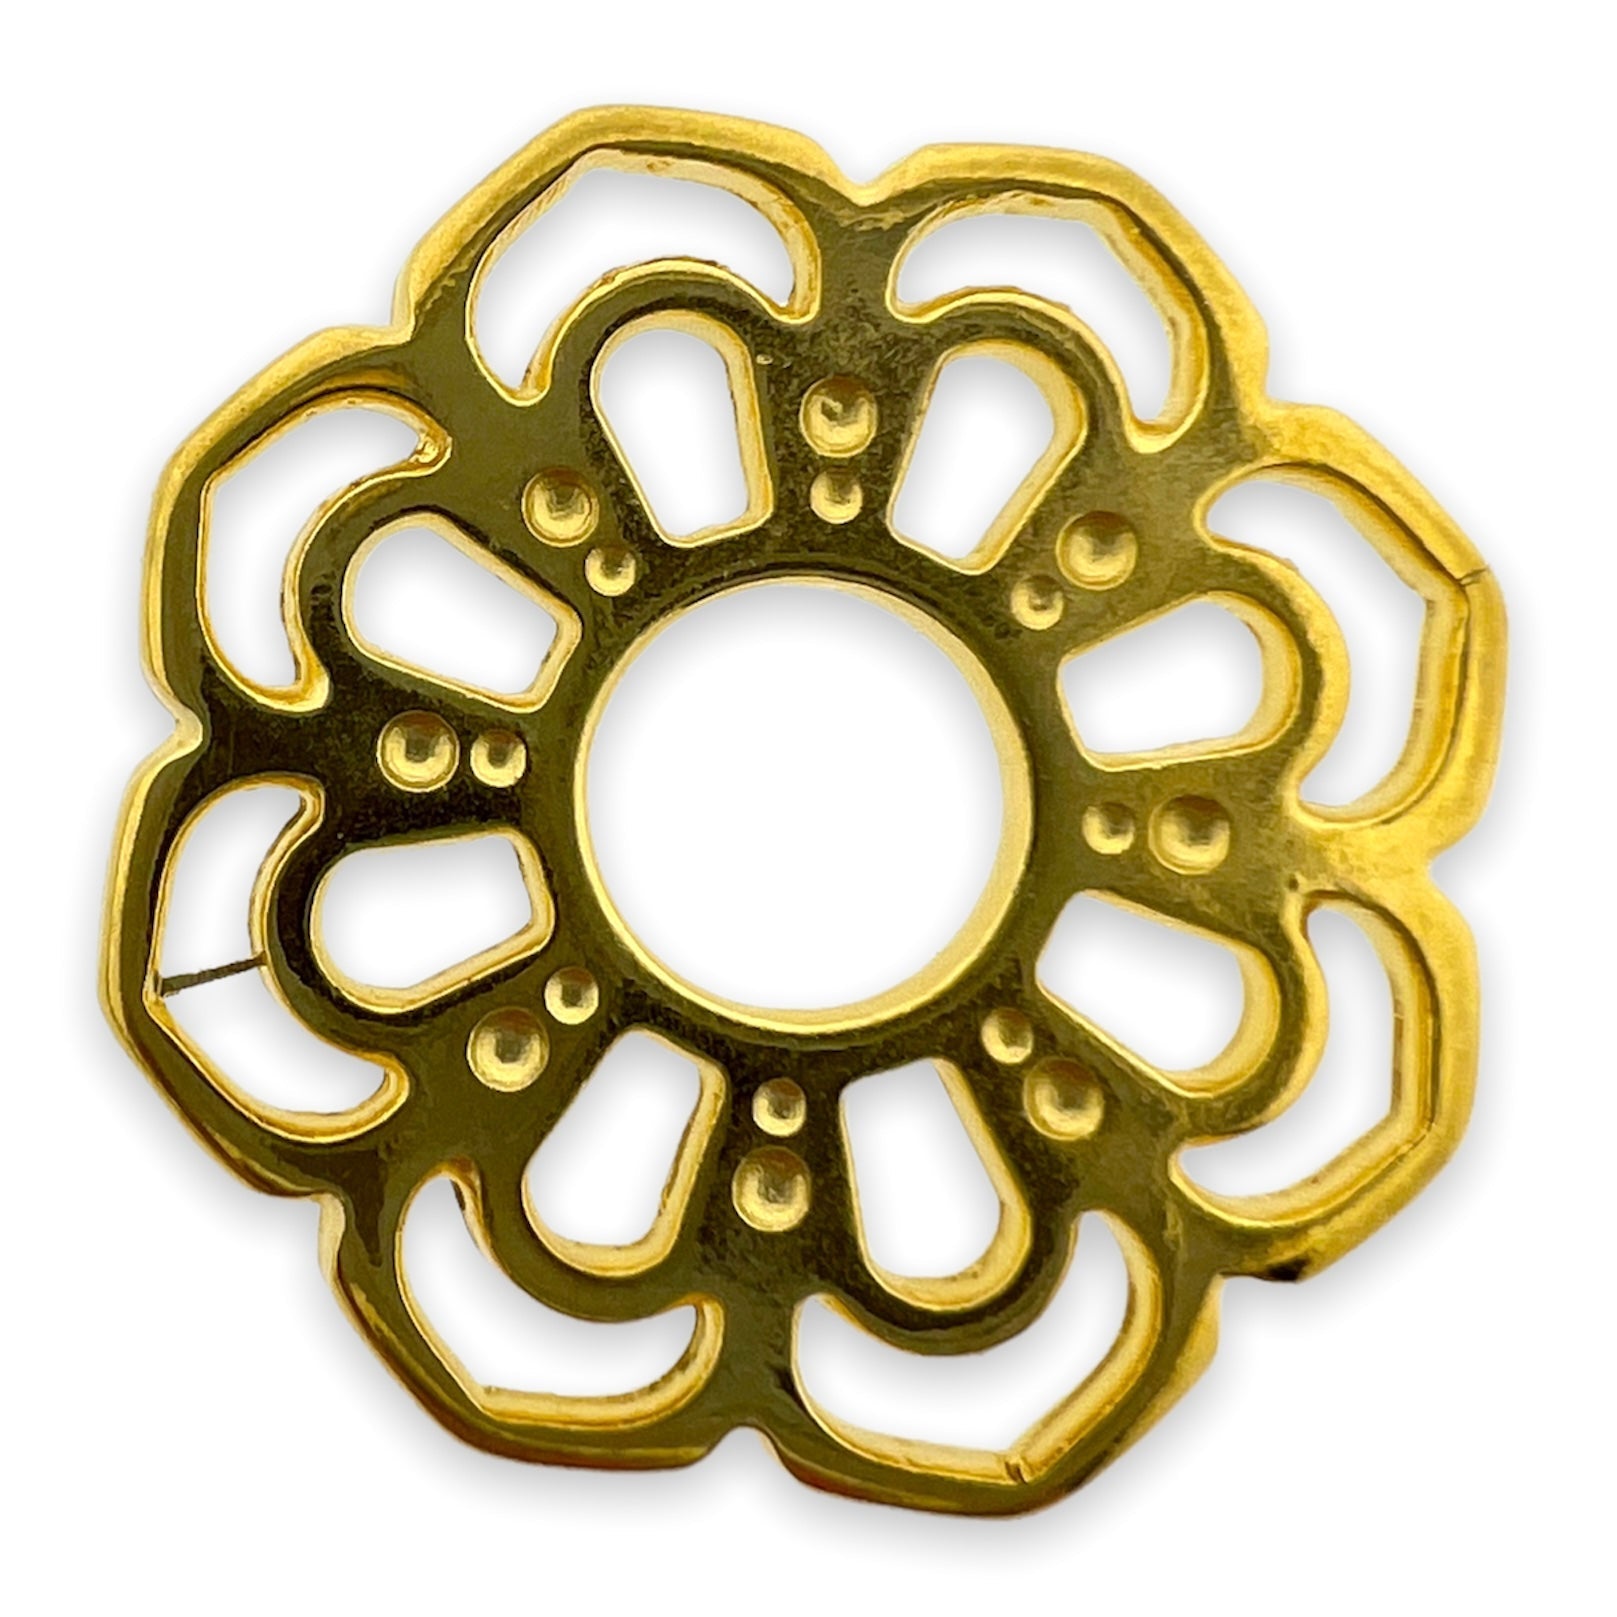 Bedel tussenzetsel wireframe bloem Goud 24K DQ 24mm-bedels-Kraaltjes van Renate